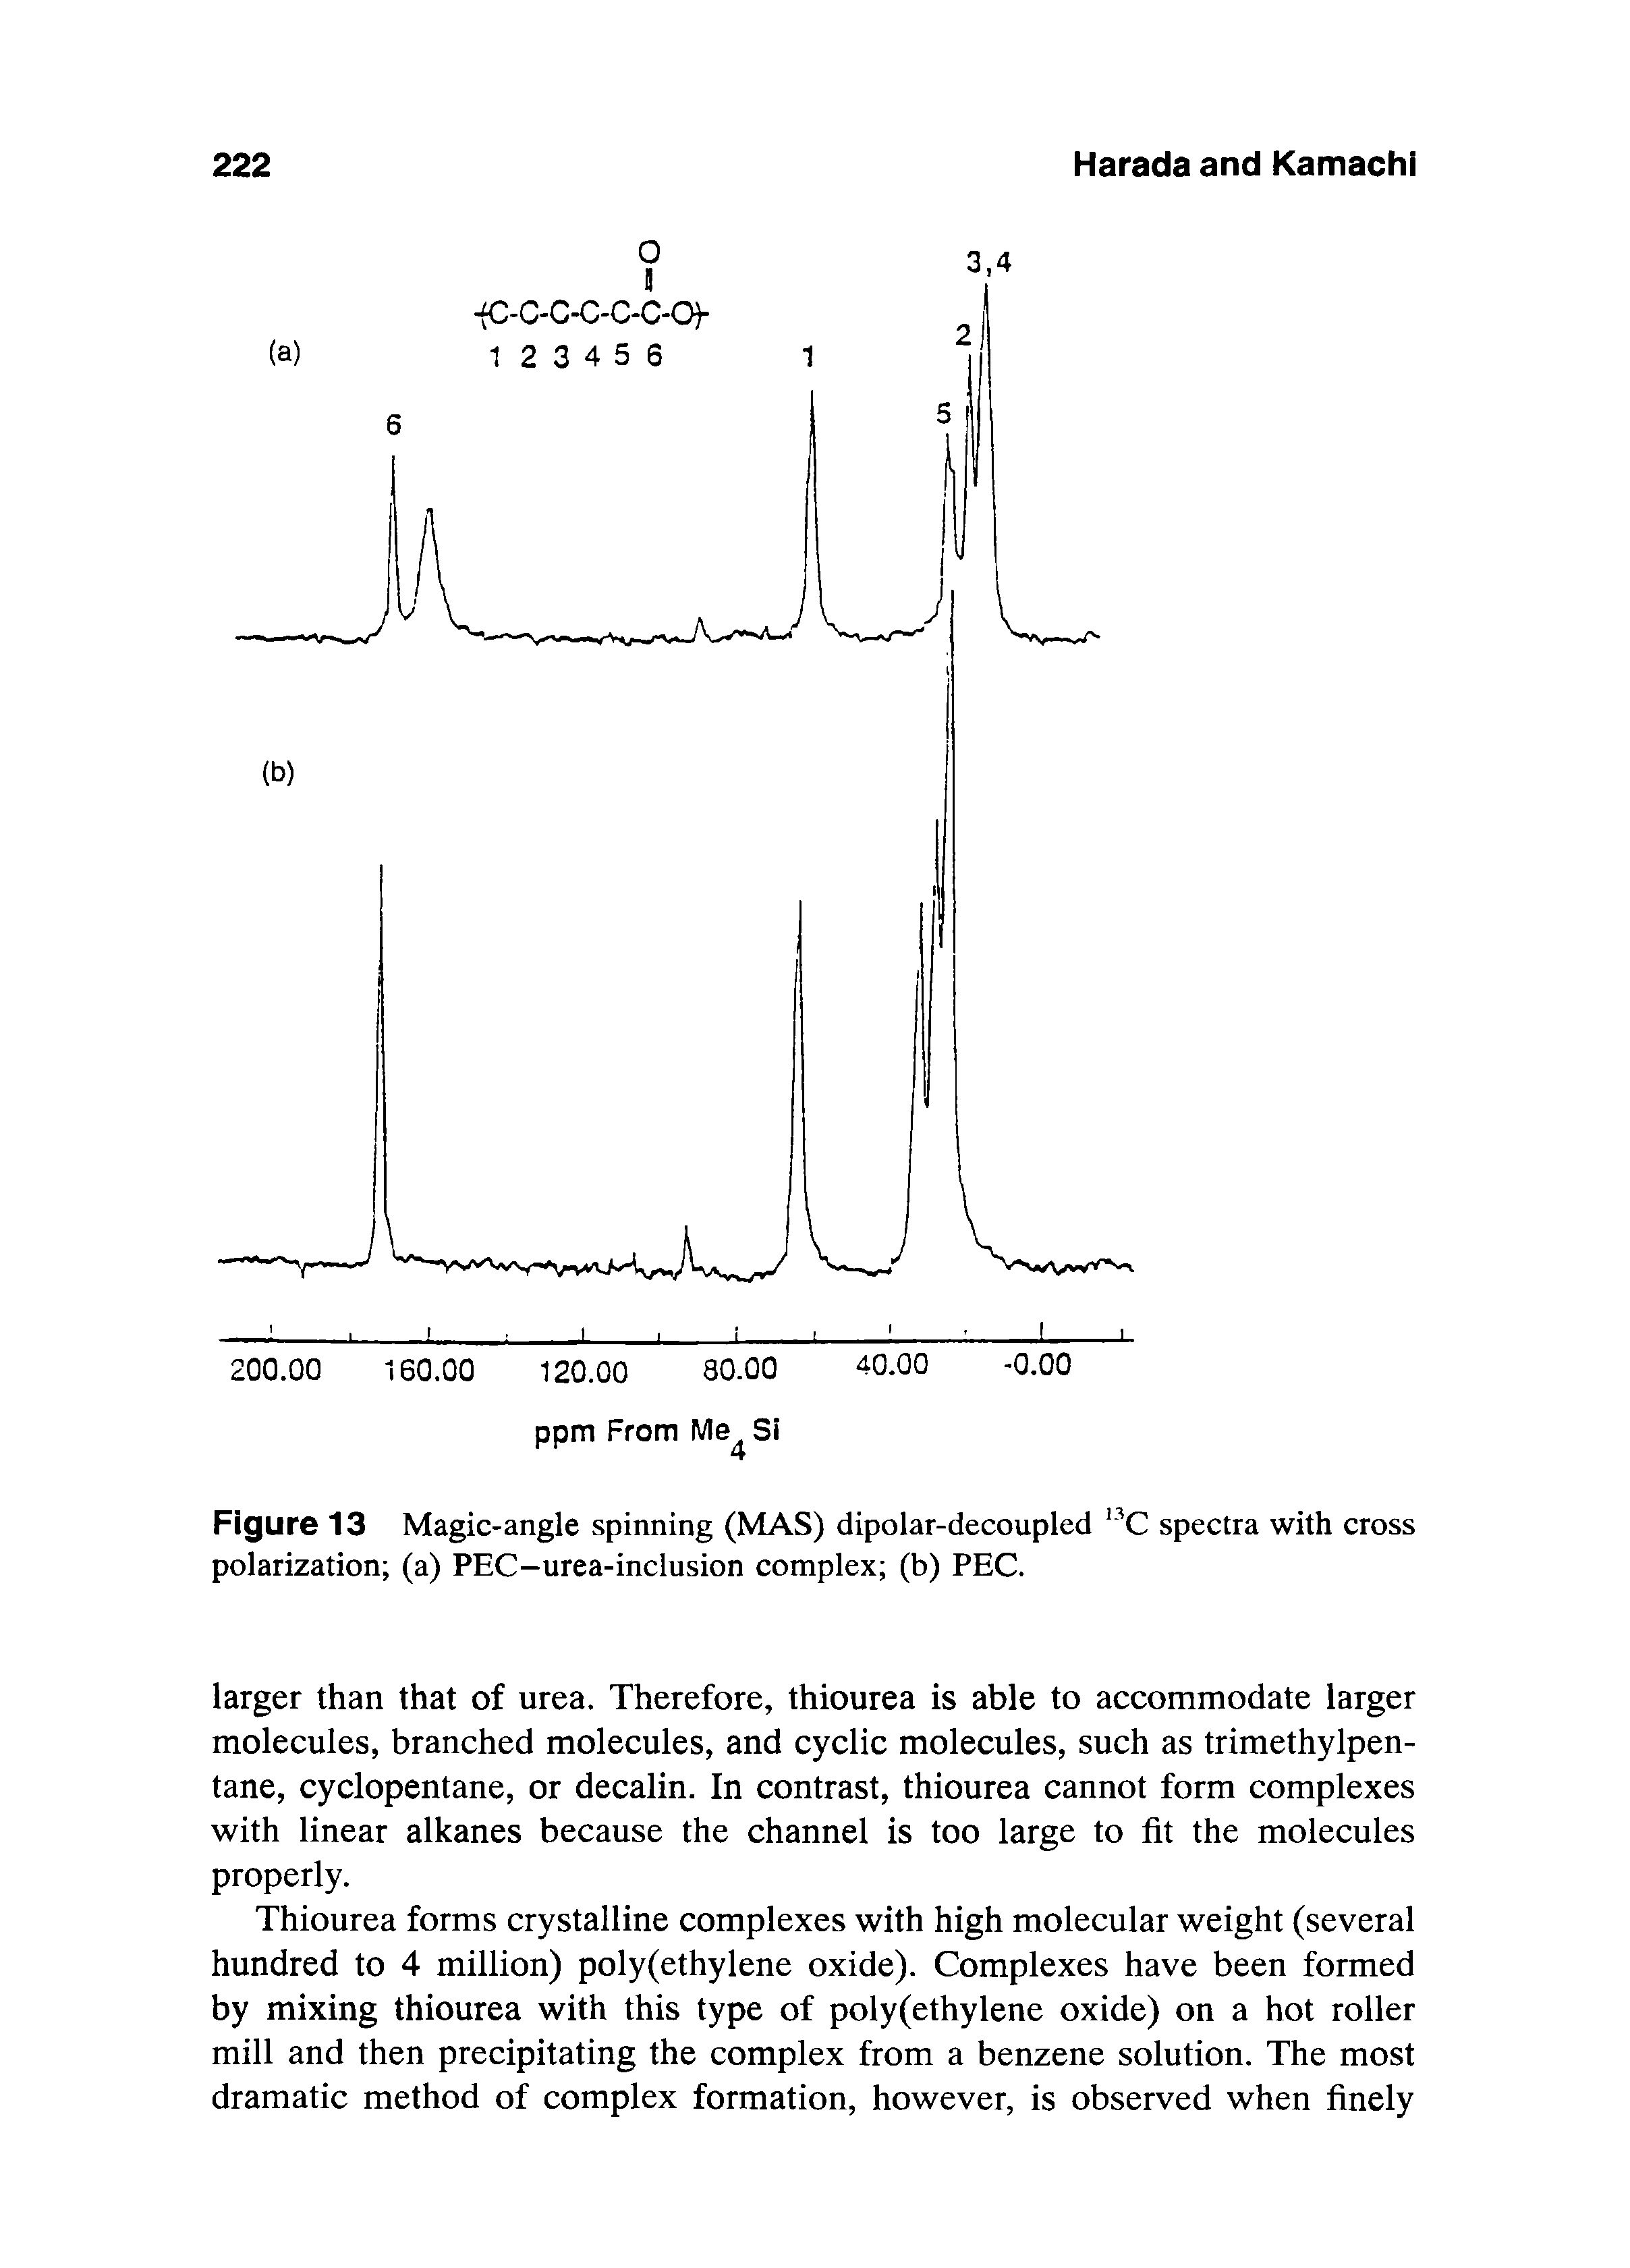 Figure 13 Magic-angle spinning (MAS) dipolar-decoupled C spectra with cross polarization (a) PEC-urea-inclusion complex (b) PEC.